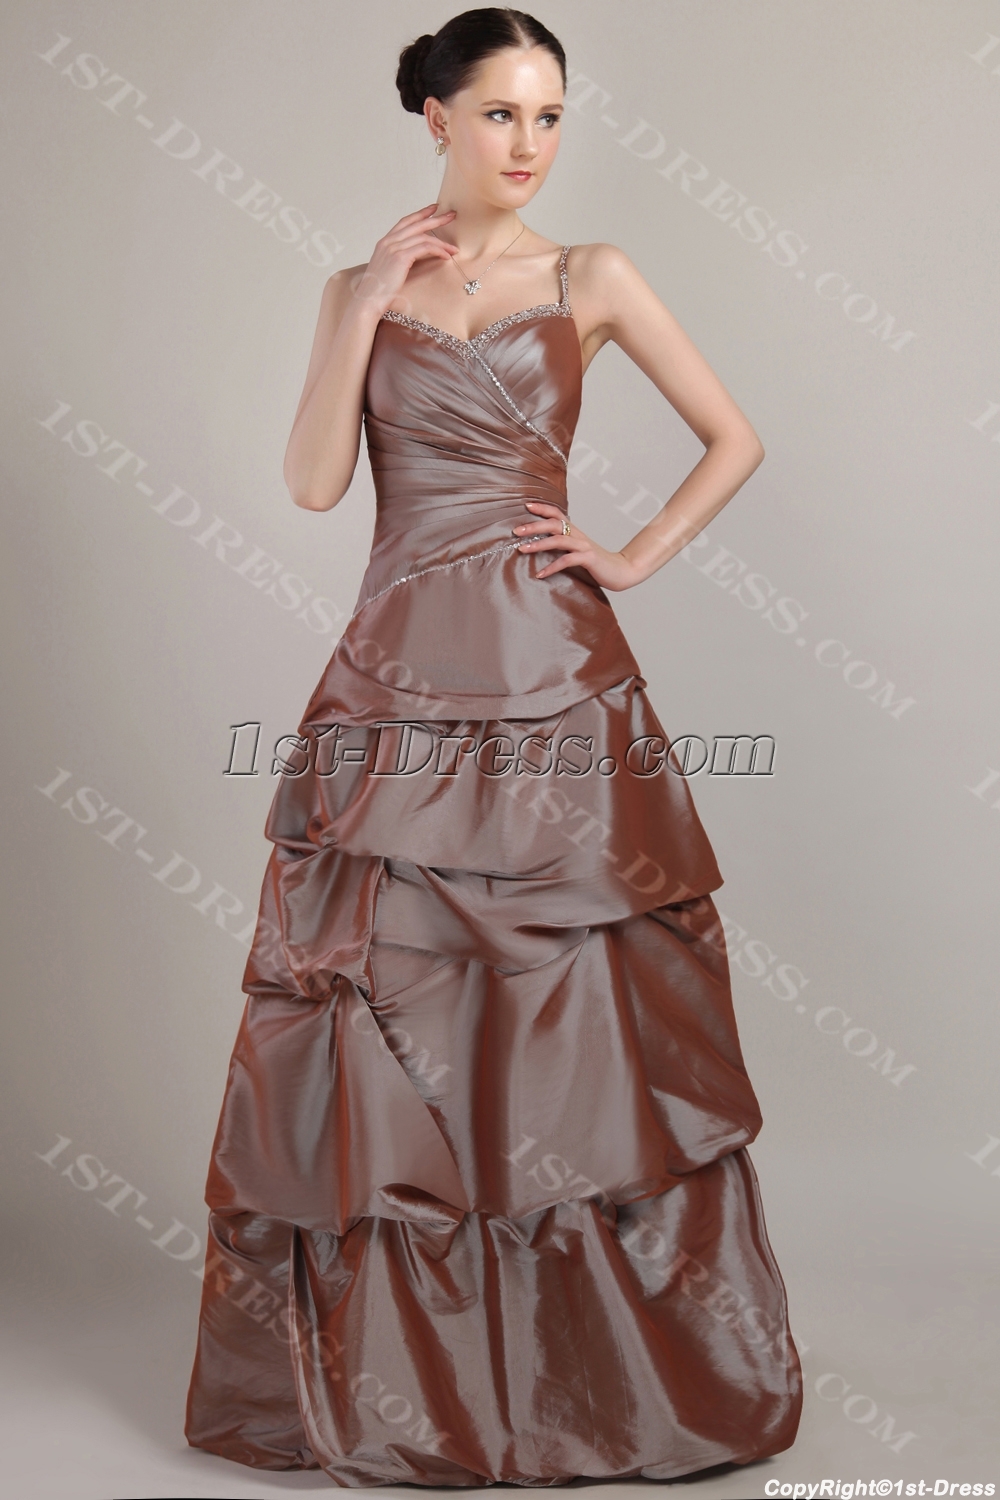 images/201304/big/Spaghetti-Straps-Brown-Pretty-Dress-for-15-IMG_3016-1076-b-1-1366269829.jpg